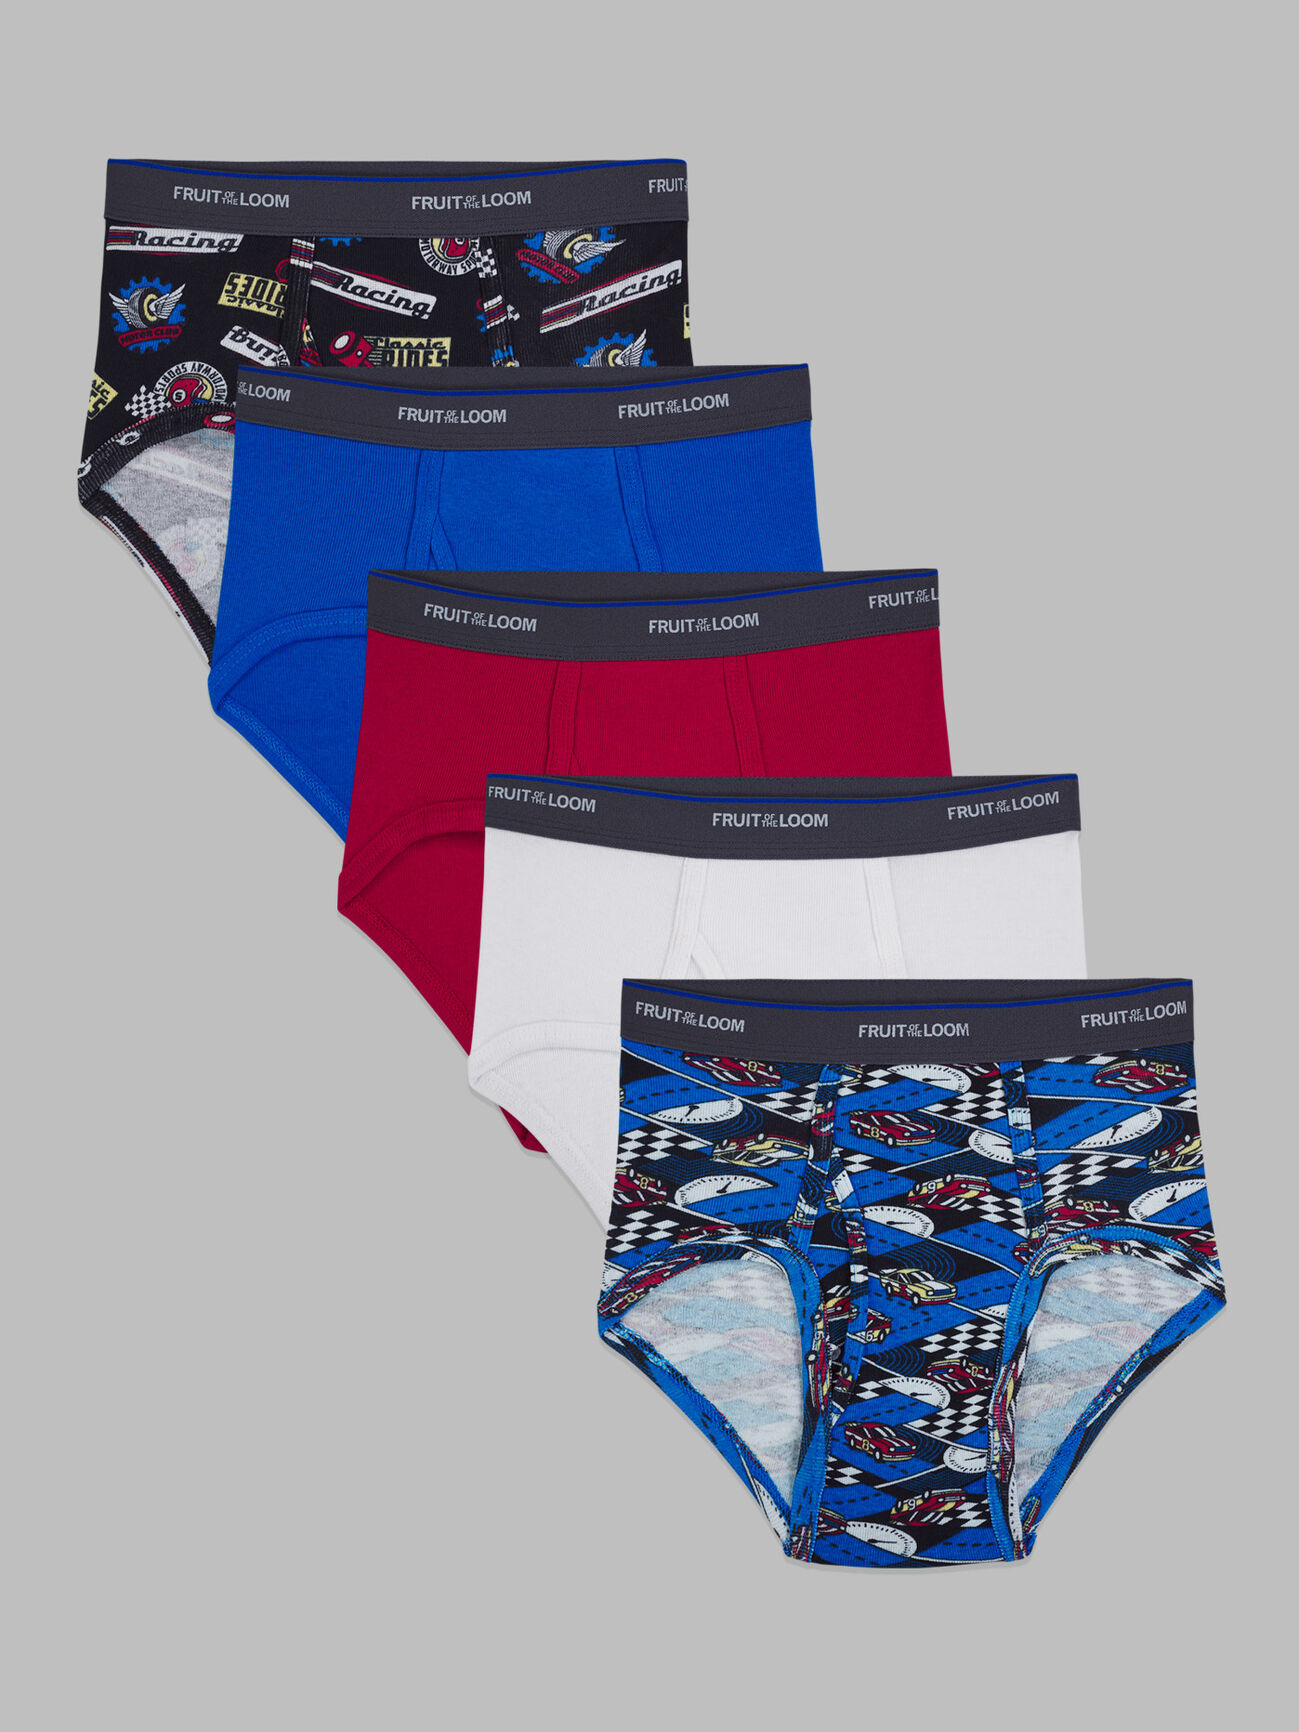  Equipo - Men's Underwear / Men's Clothing: Clothing